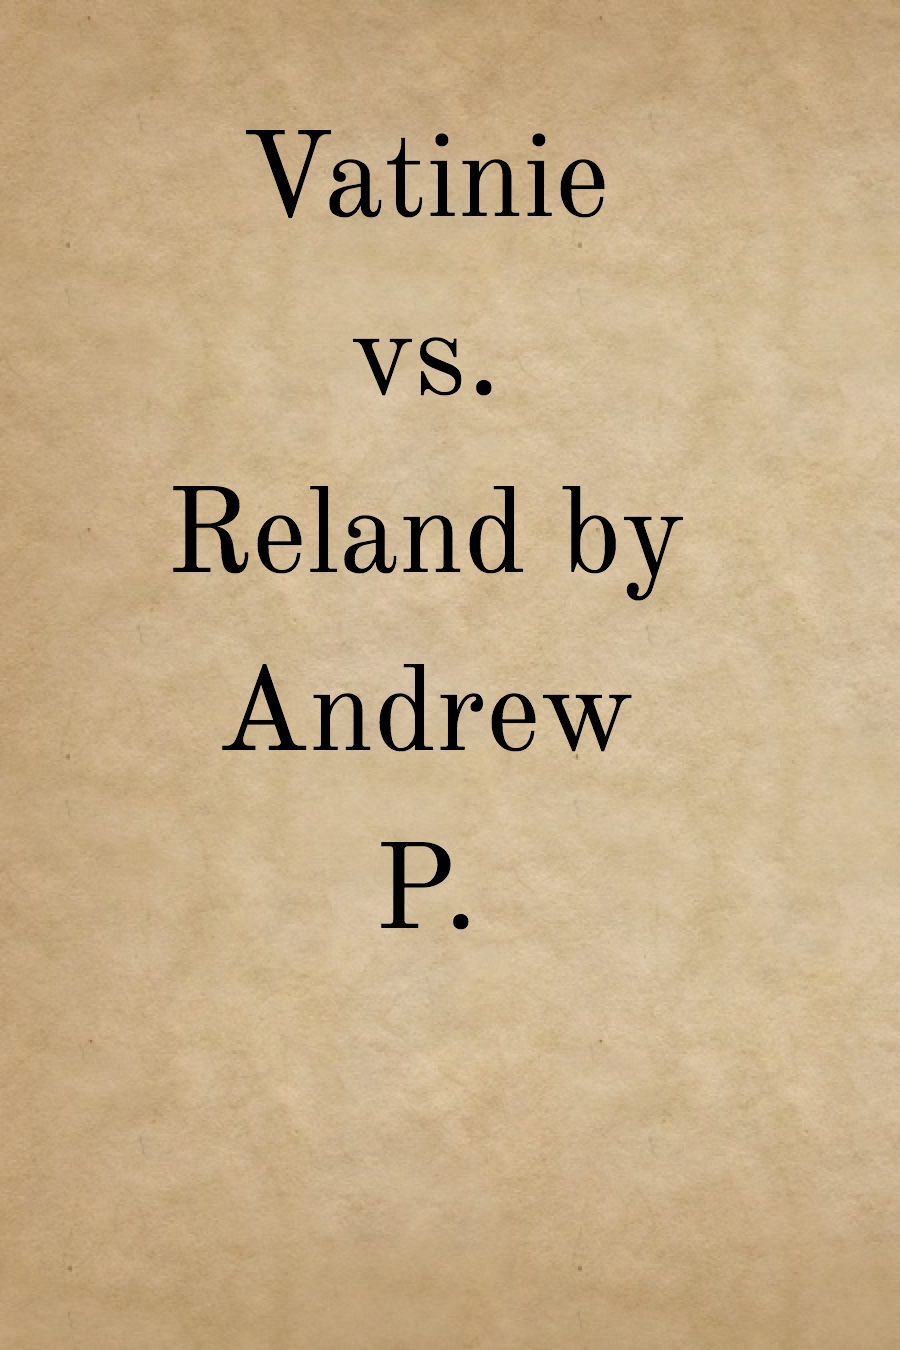 Vatinie vs Reland by Andrew P